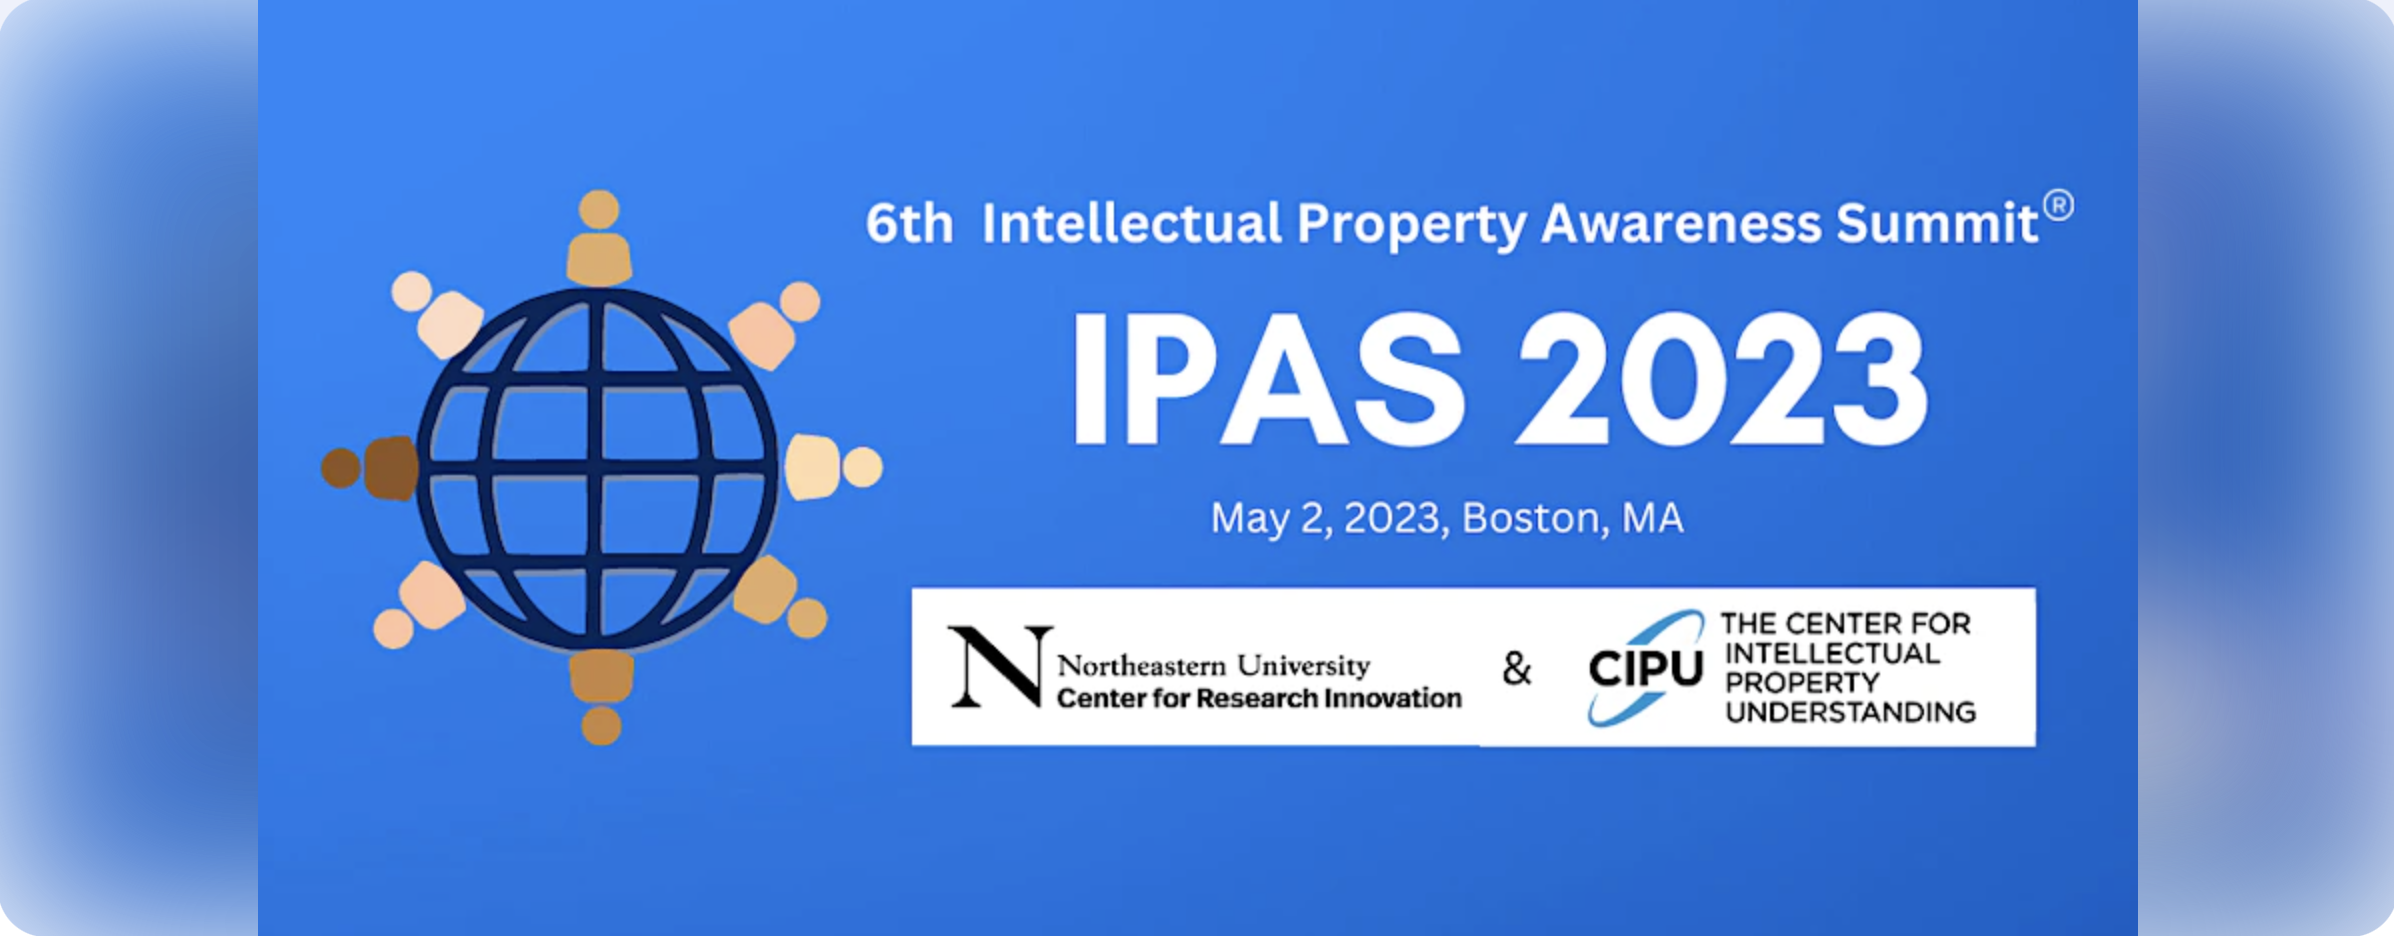 Intellectual Property Awareness Summit 2023